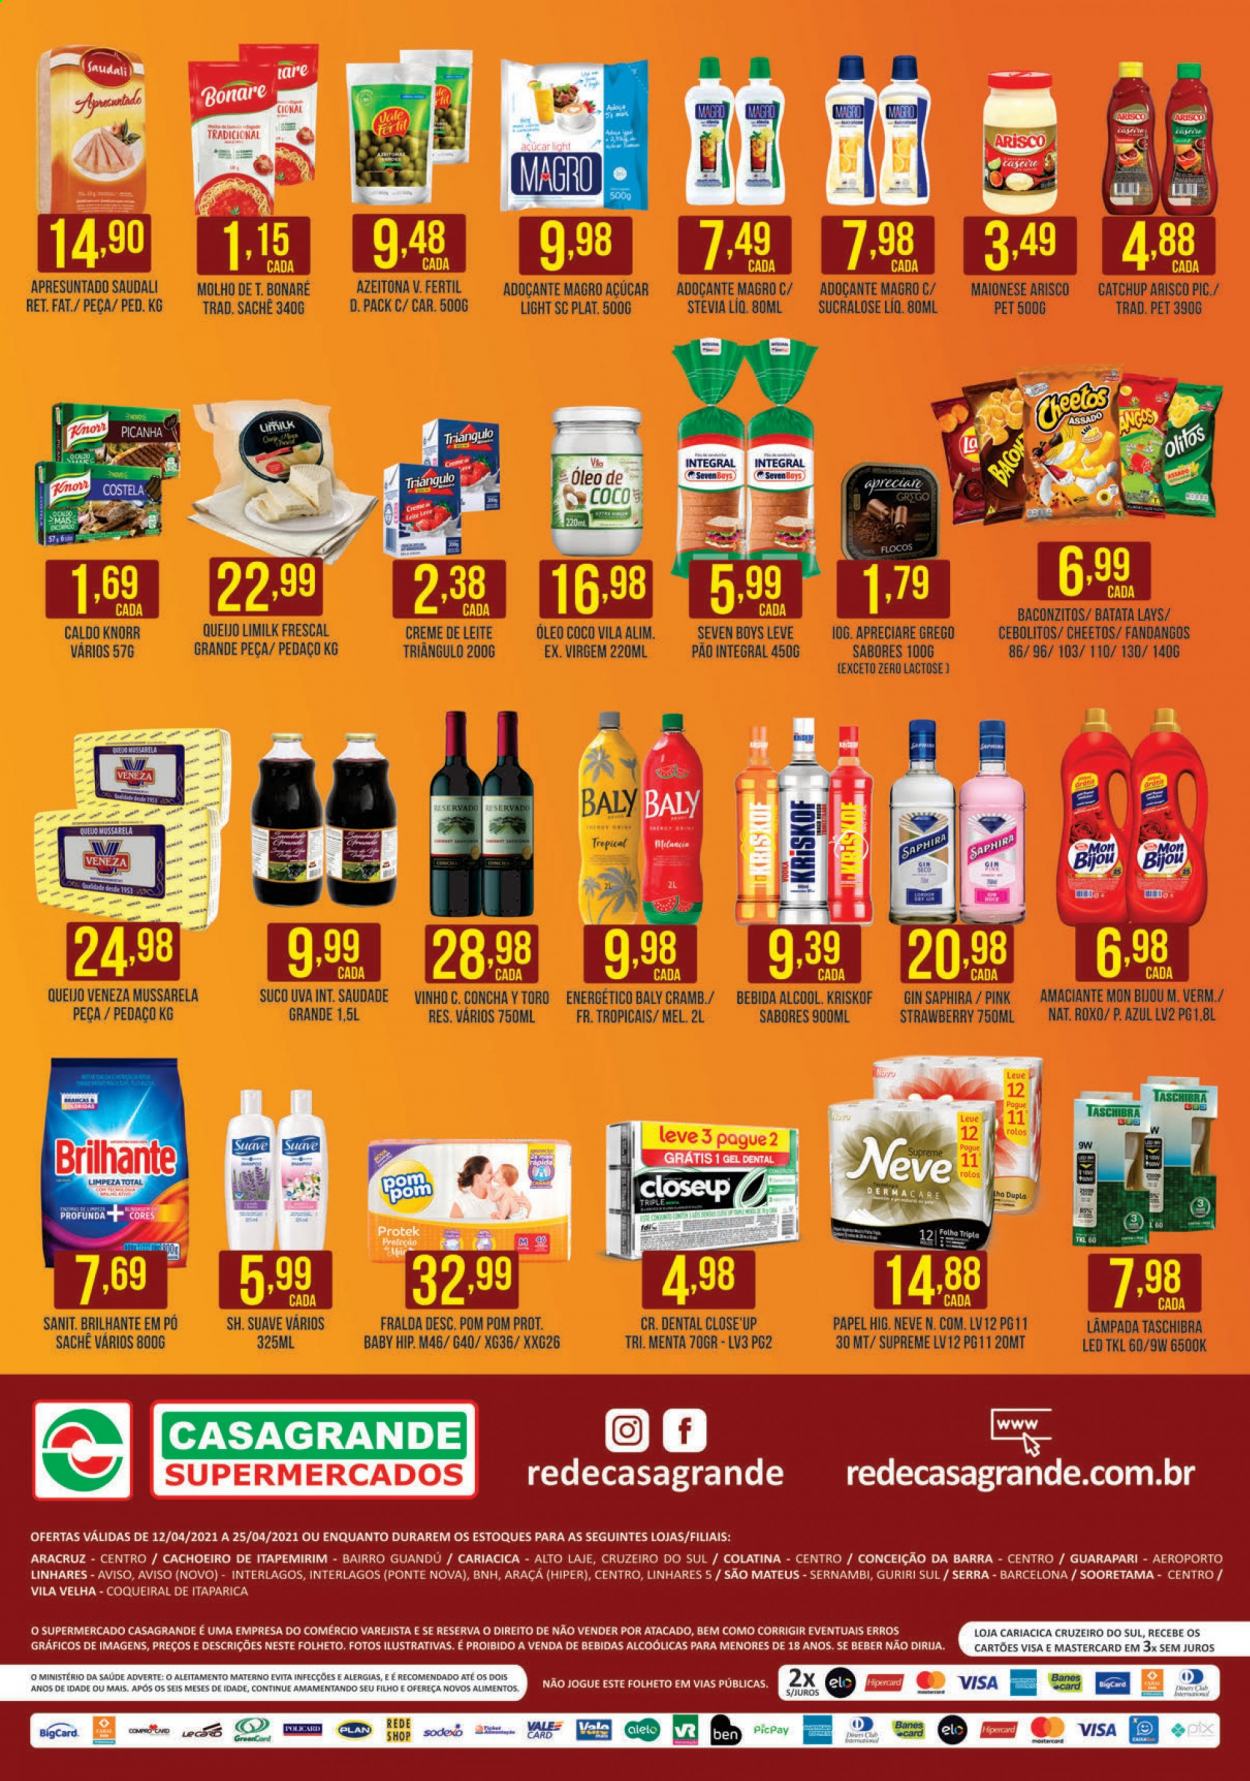 Encarte Casagrande Supermercados  - 12.04.2021 - 25.04.2021.